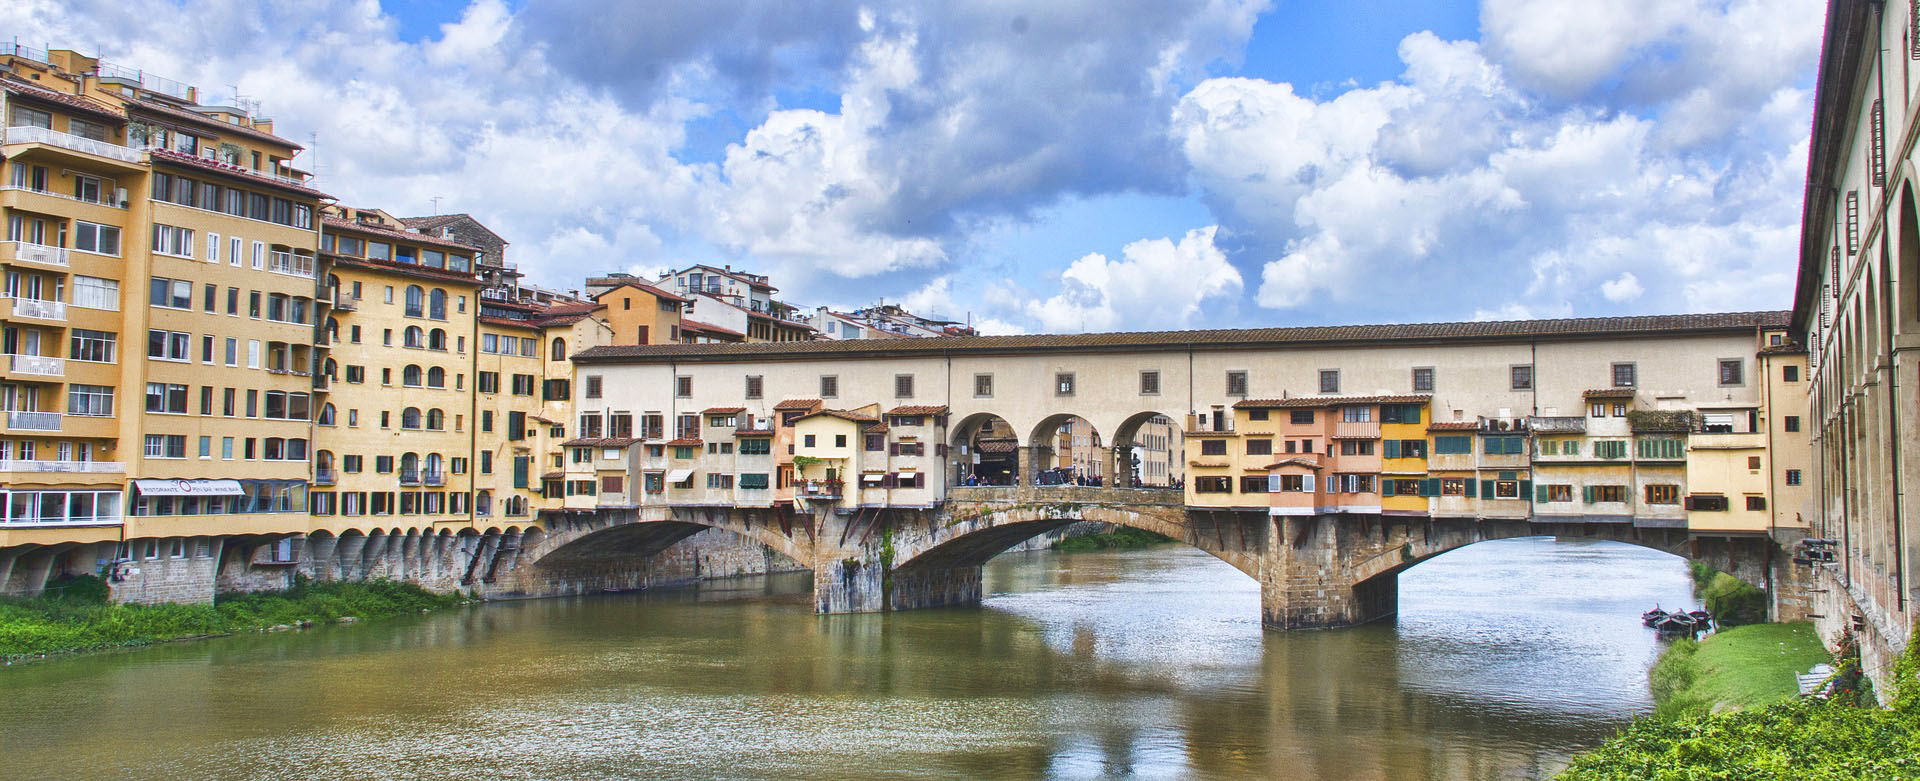 Toscana Italy Firenze Ponte Vecchio